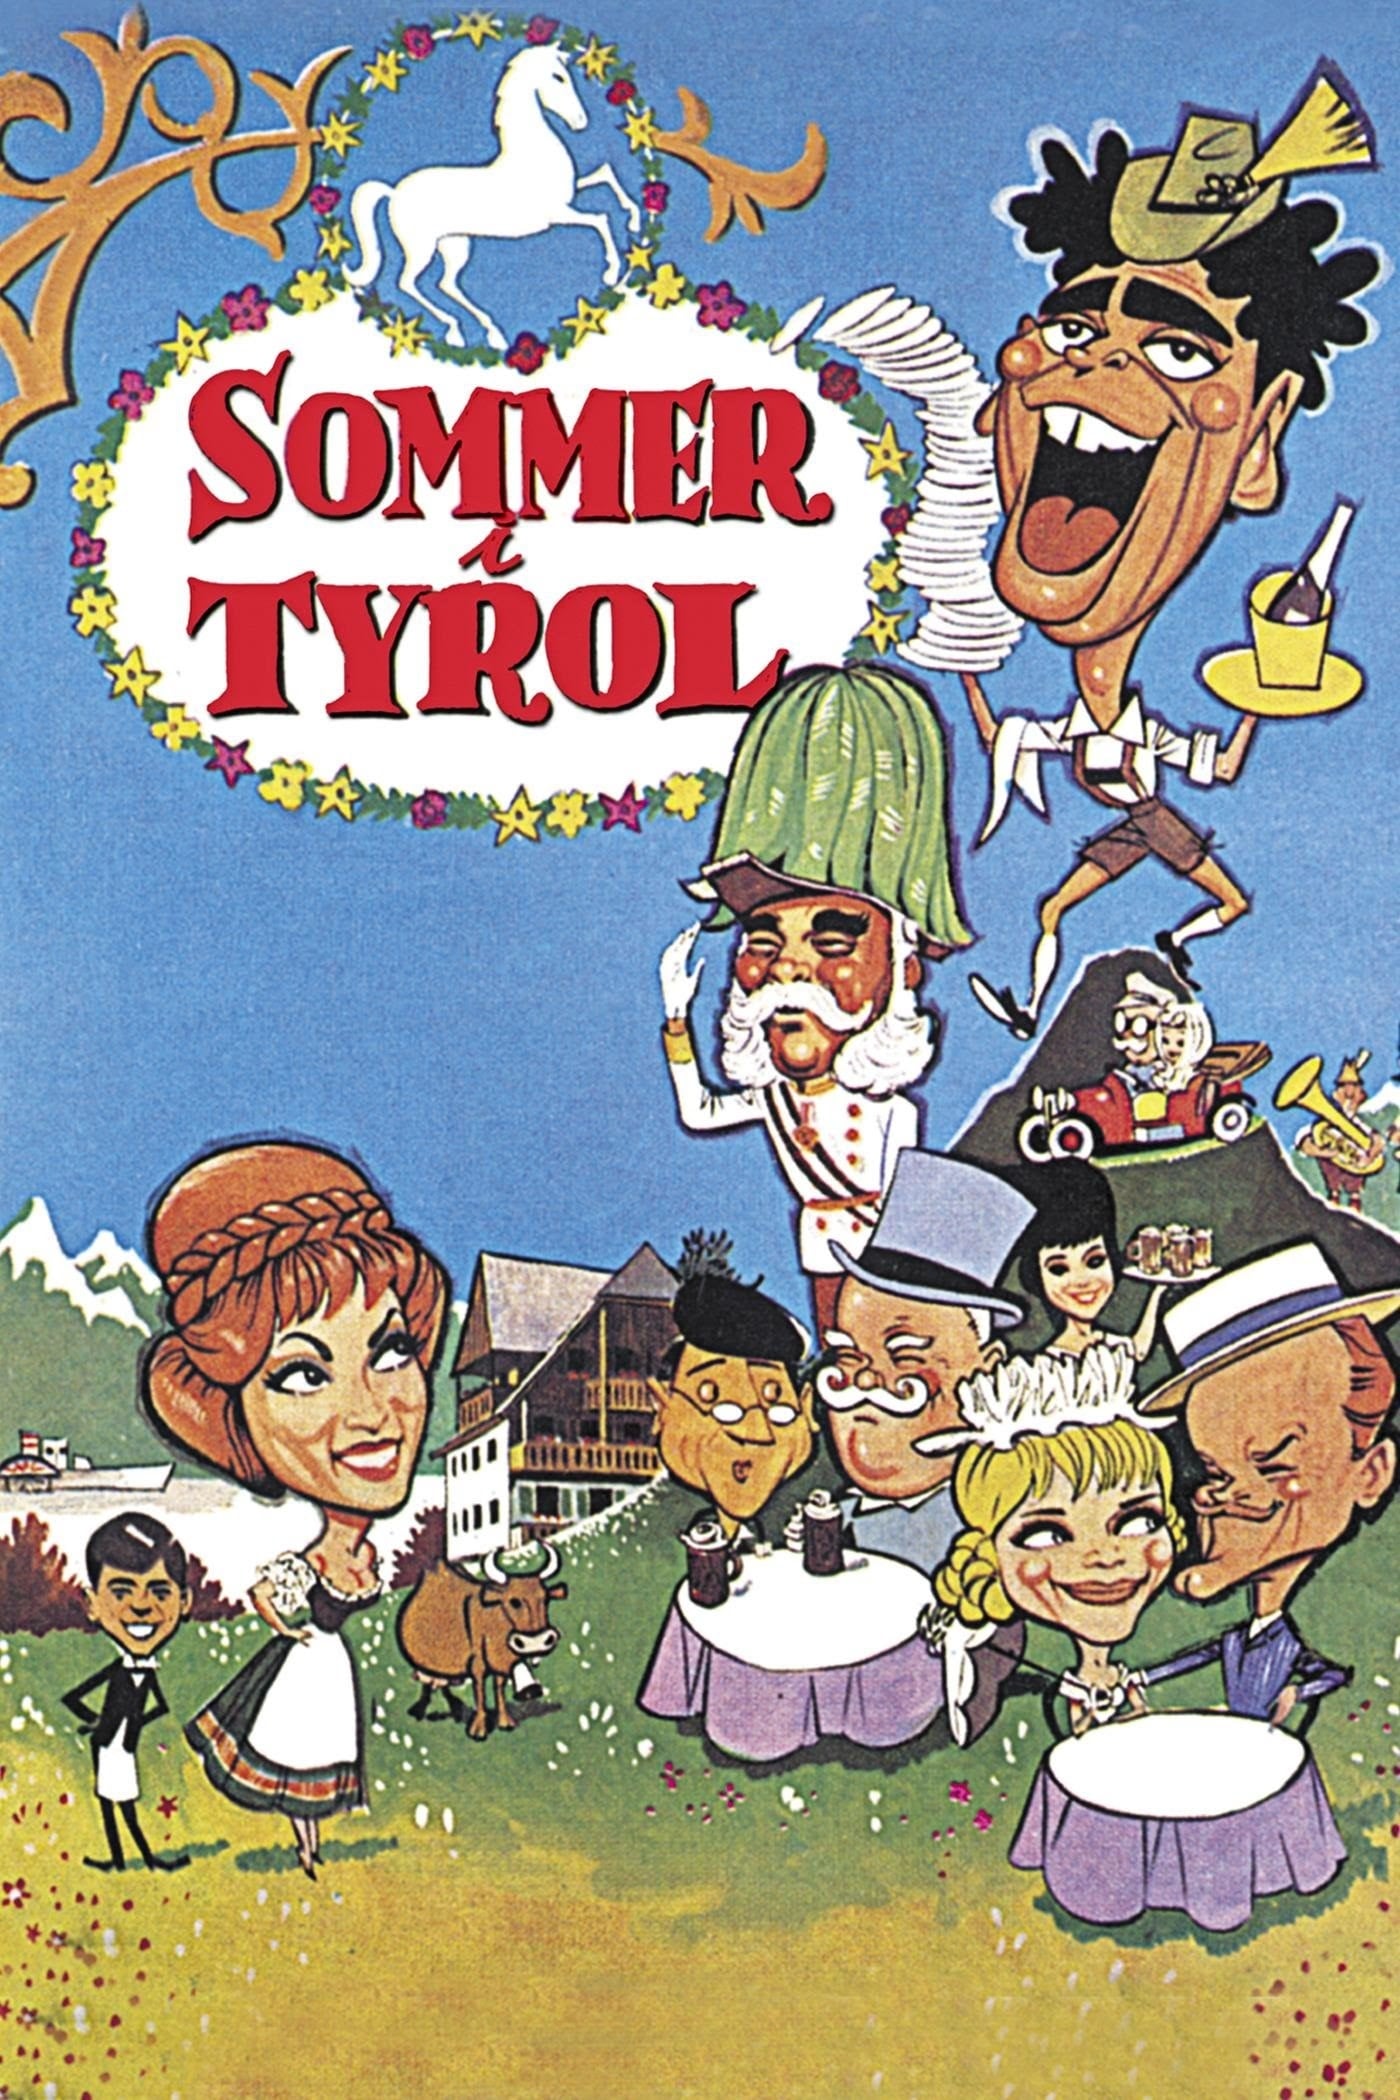 Summer in Tyrol (1964)